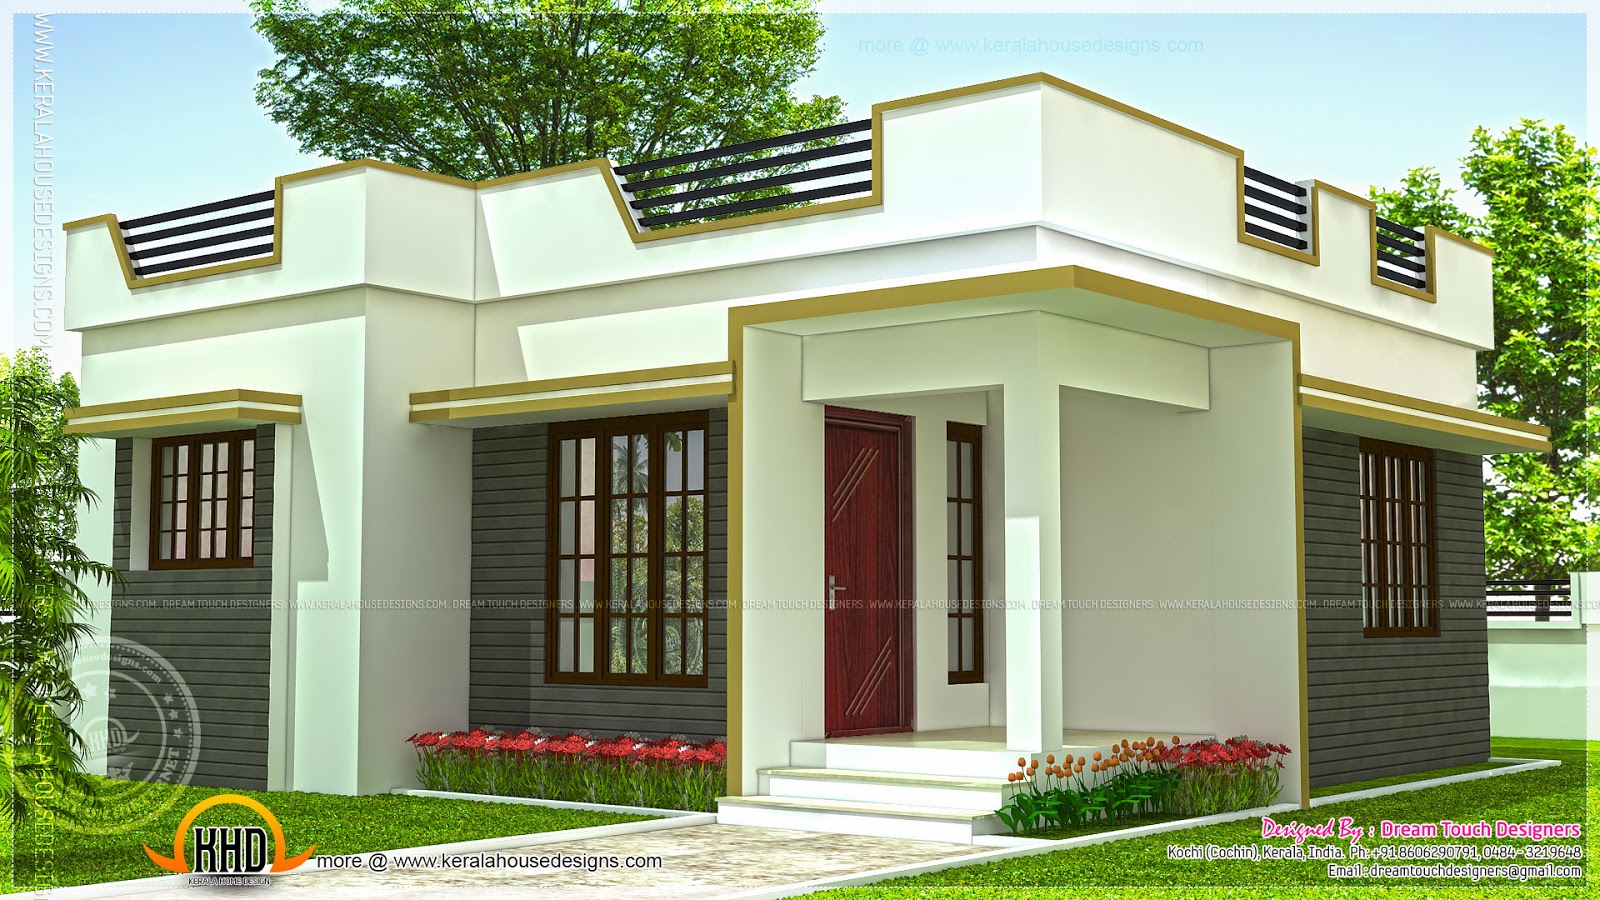  Kerala  Small  House  Plans  Joy Studio Design Gallery 